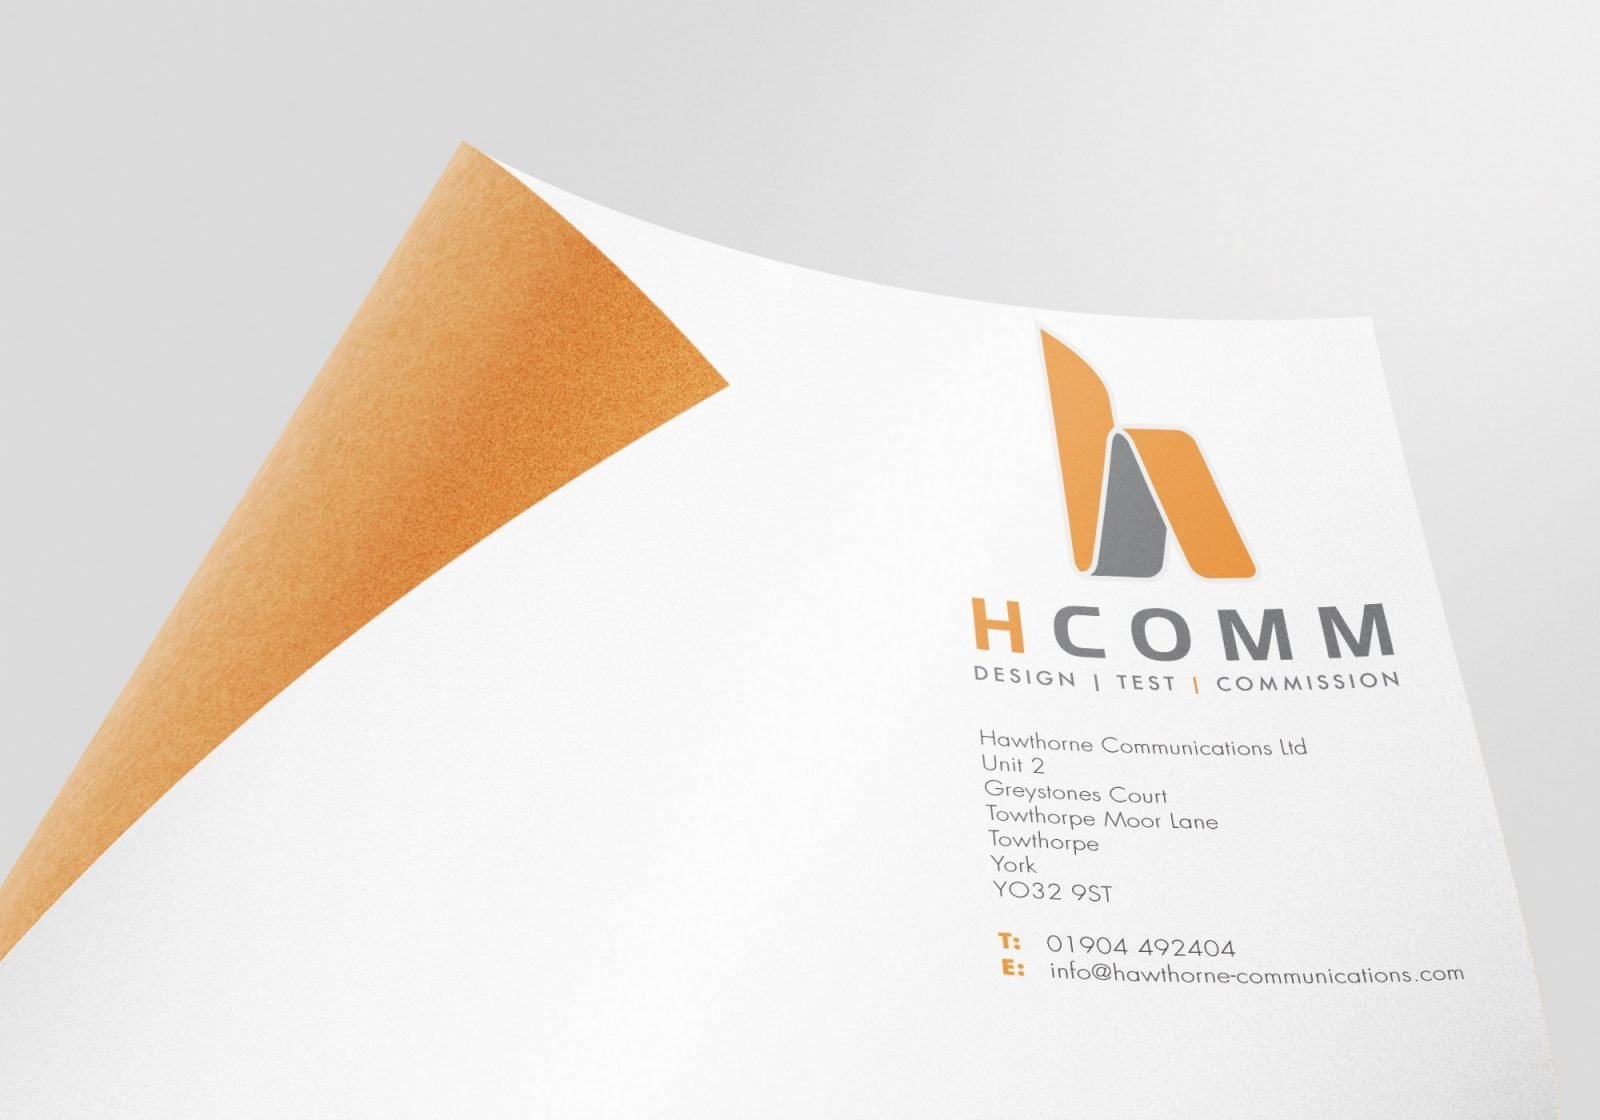 A logo close up on paper showing Hcomm Rail's logo design